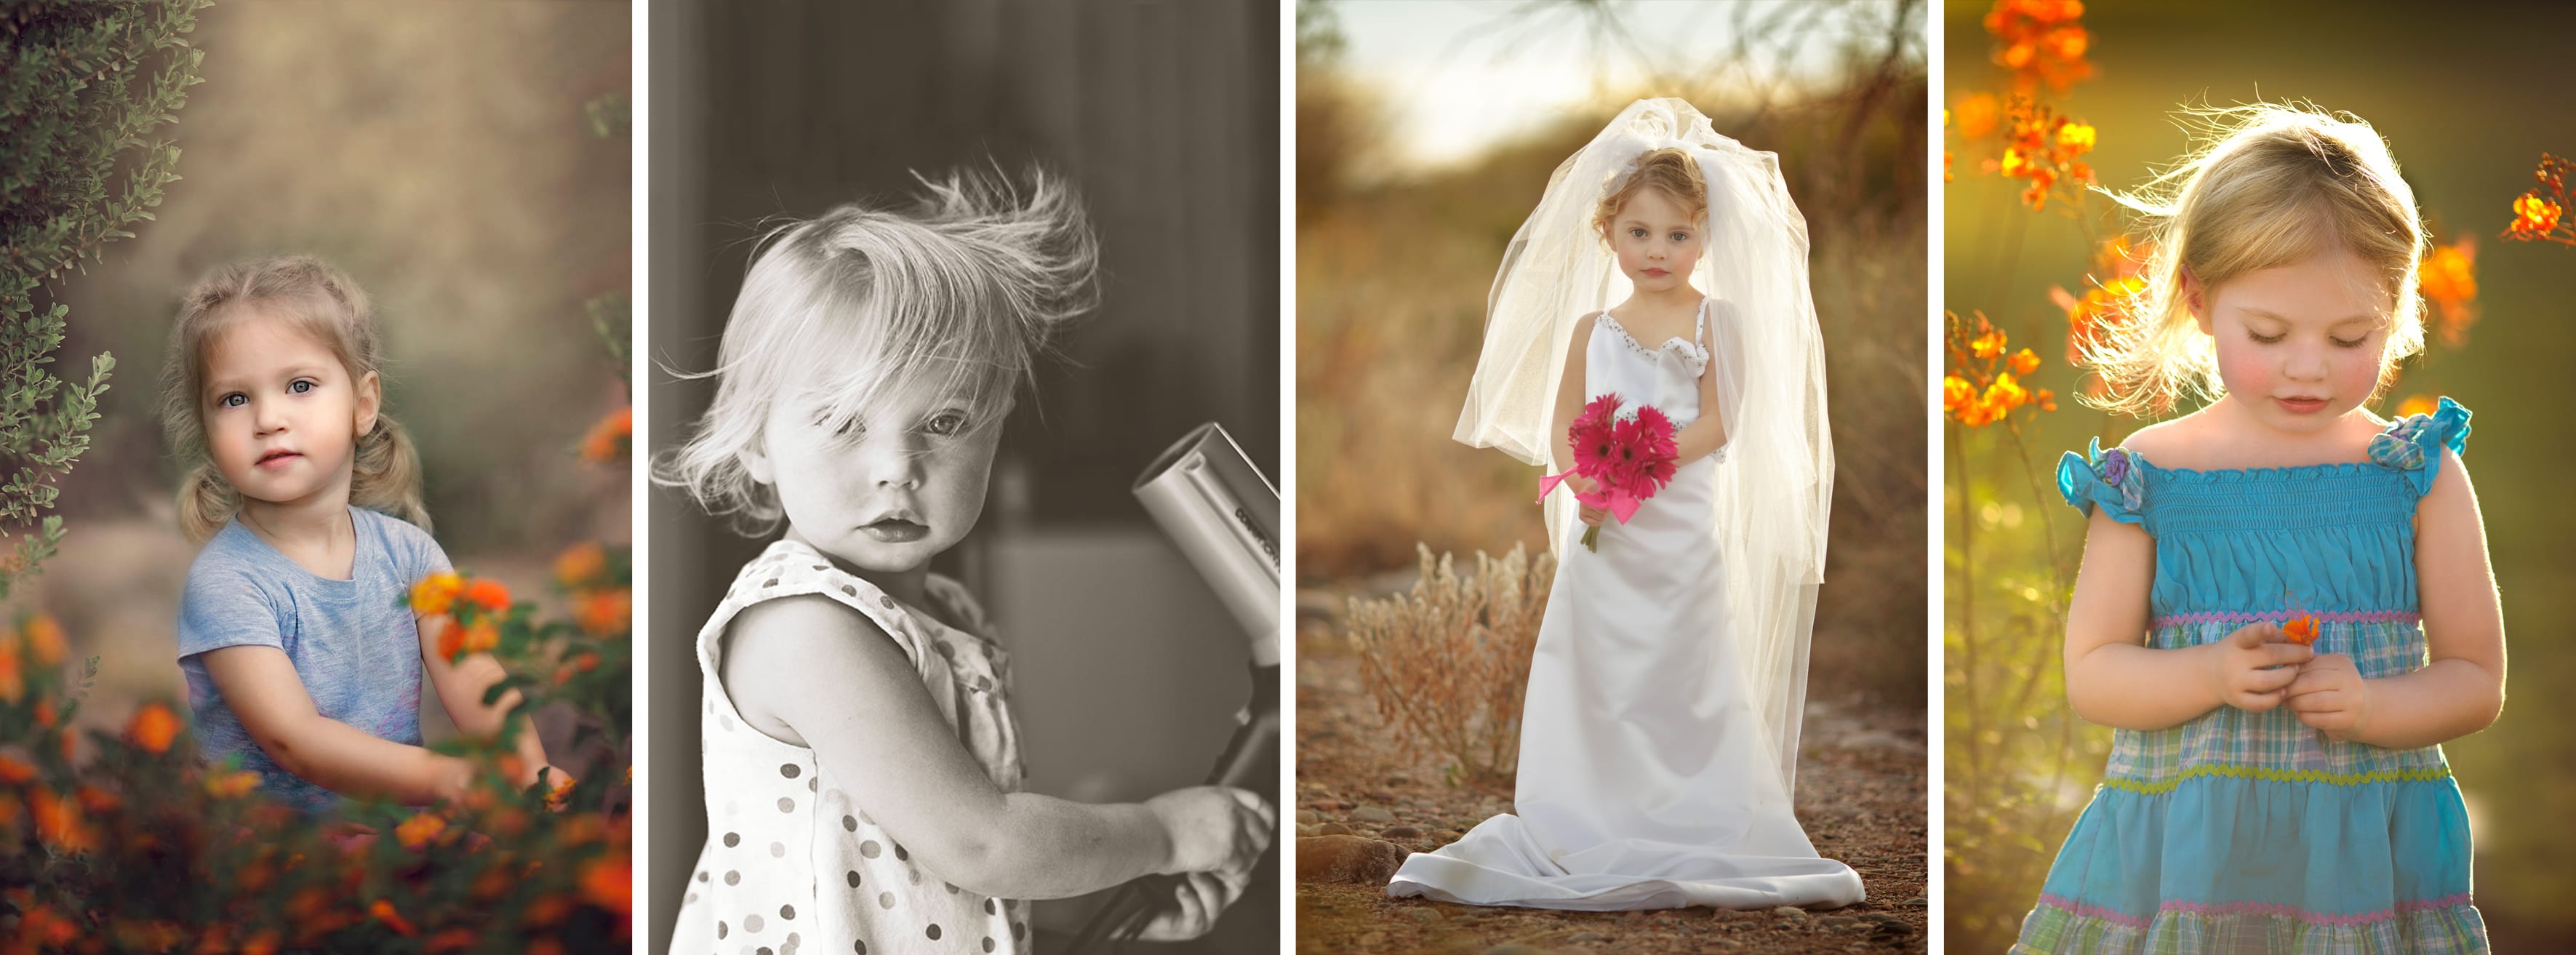 Award winning child photos by Phoenix photographer Cozy Clicks